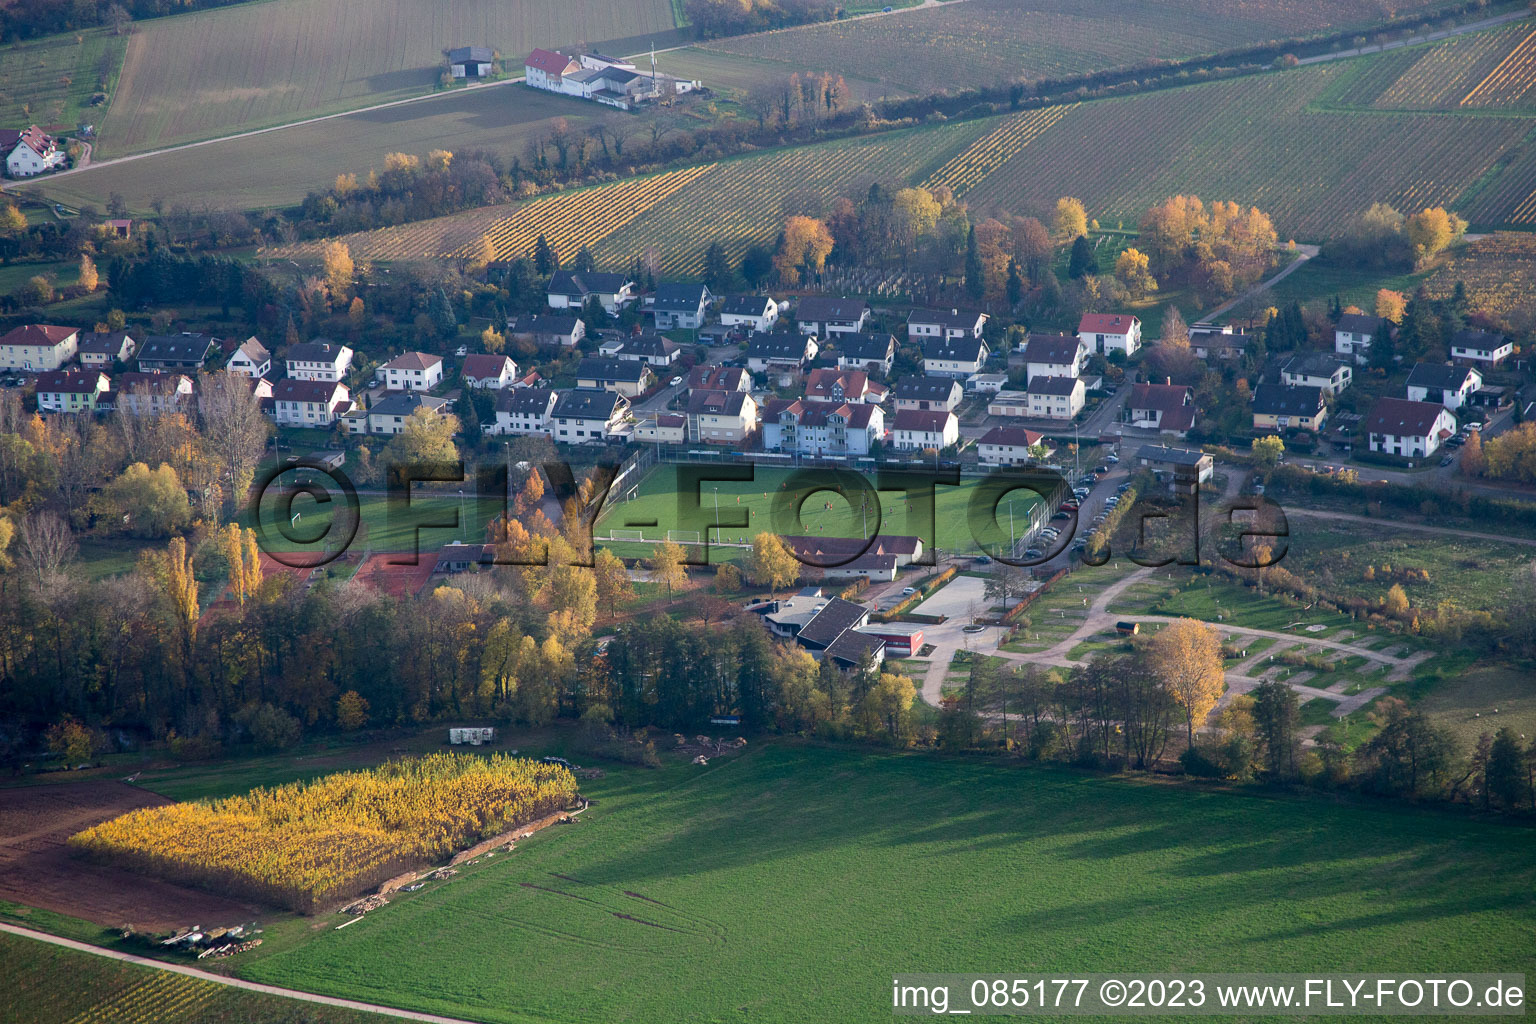 Oblique view of Sports fields in the district Ingenheim in Billigheim-Ingenheim in the state Rhineland-Palatinate, Germany